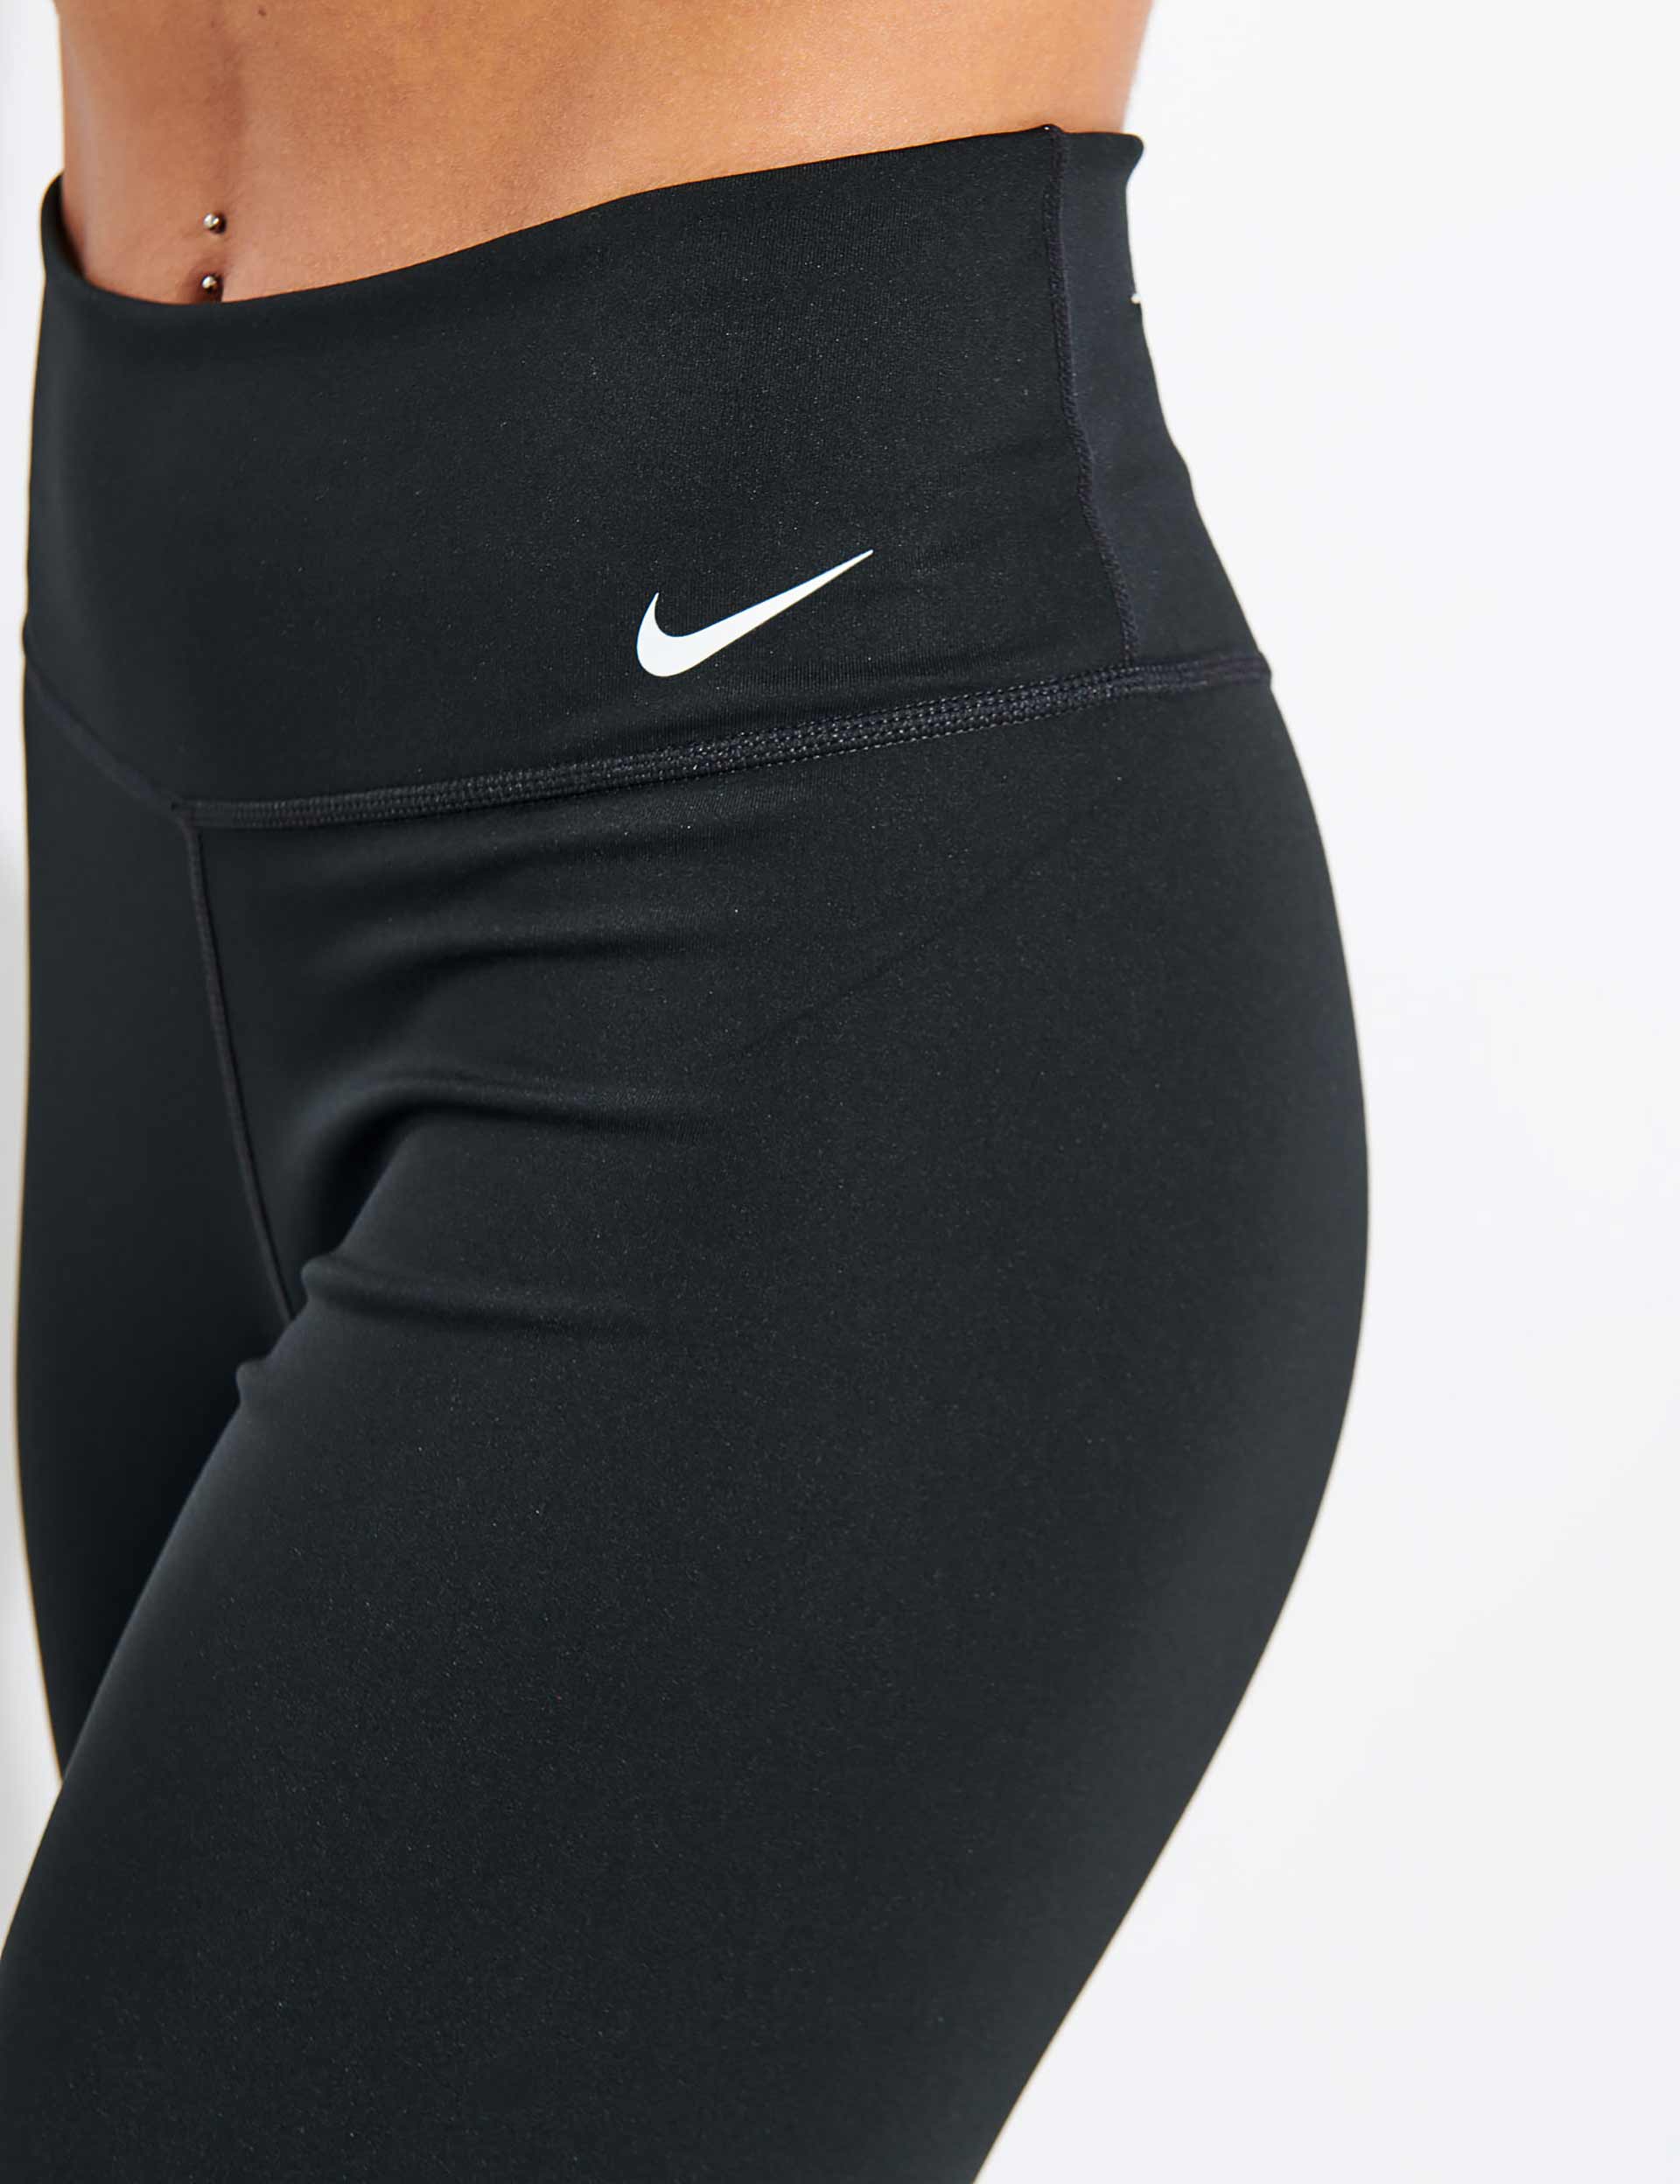 Nike One Bike Shorts 7" - Black/Whiteimage4- The Sports Edit